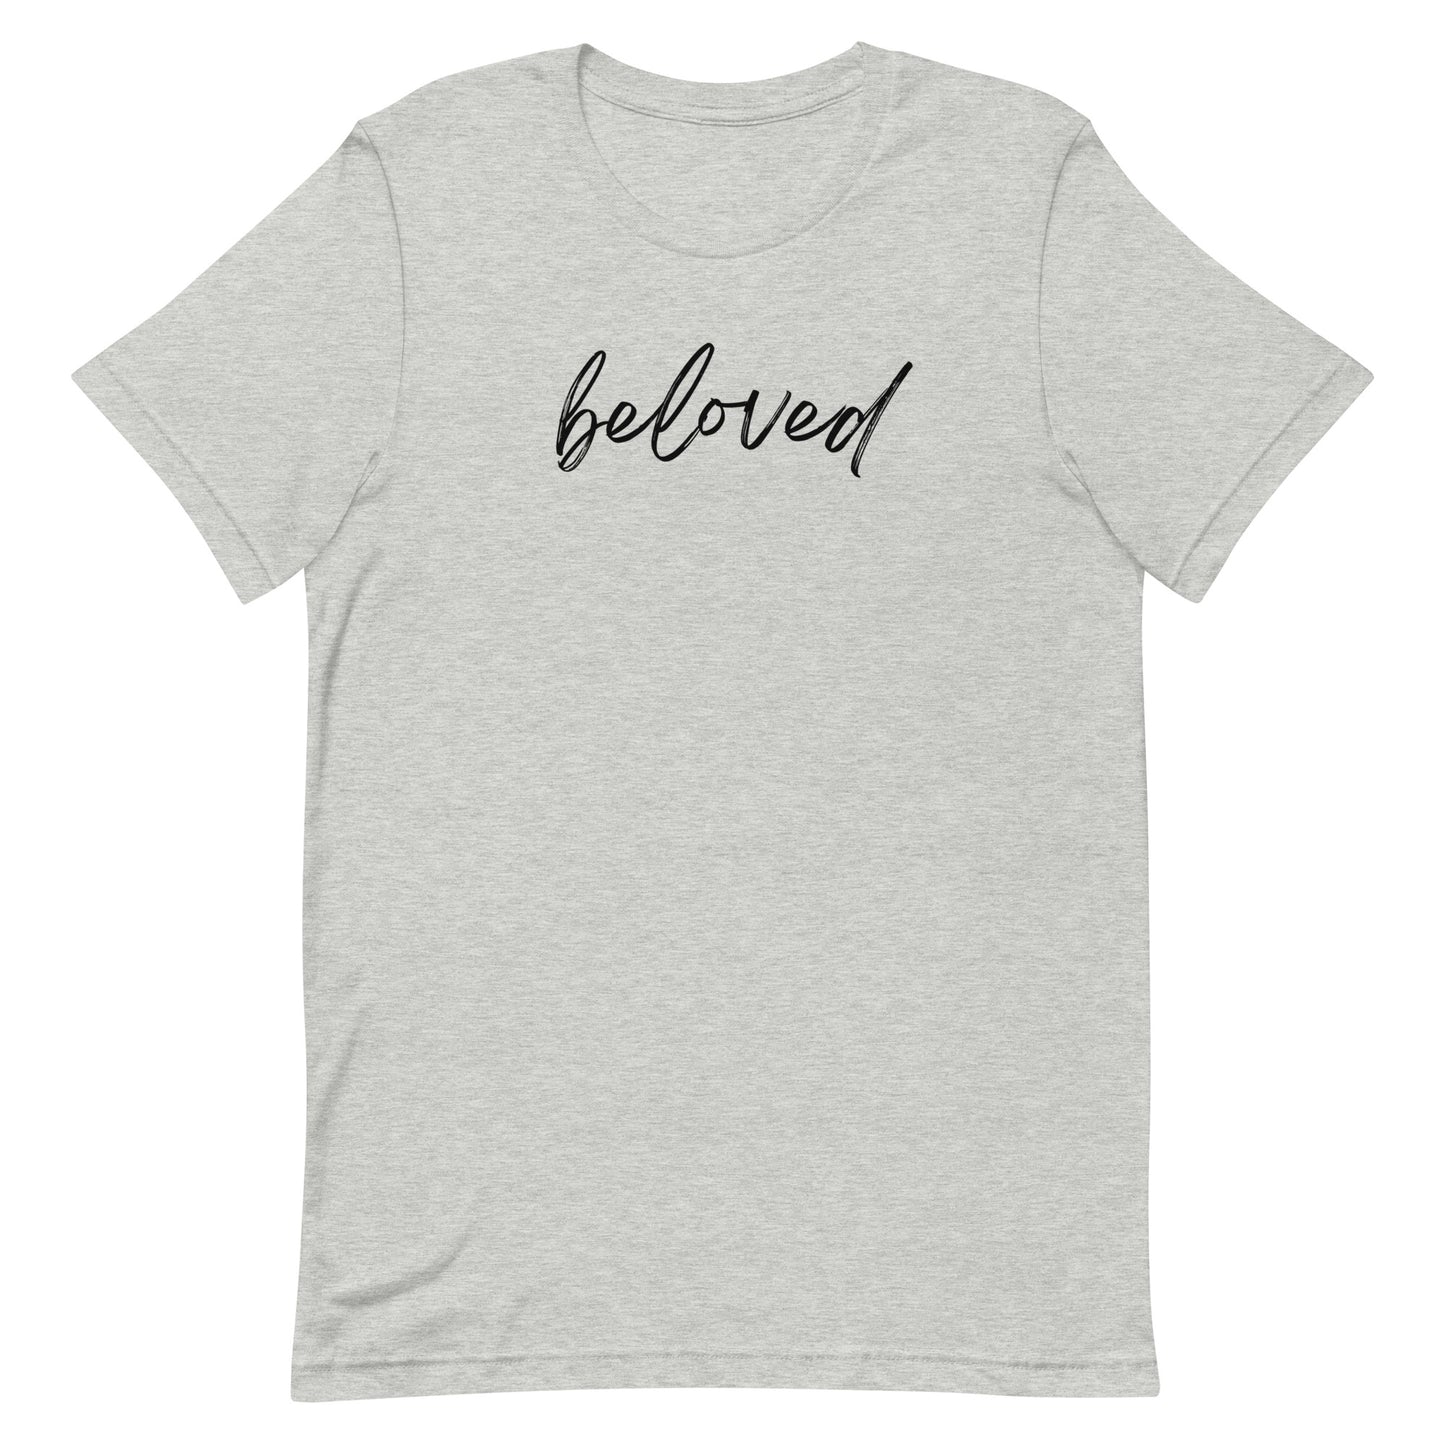 "Beloved"  t-shirt